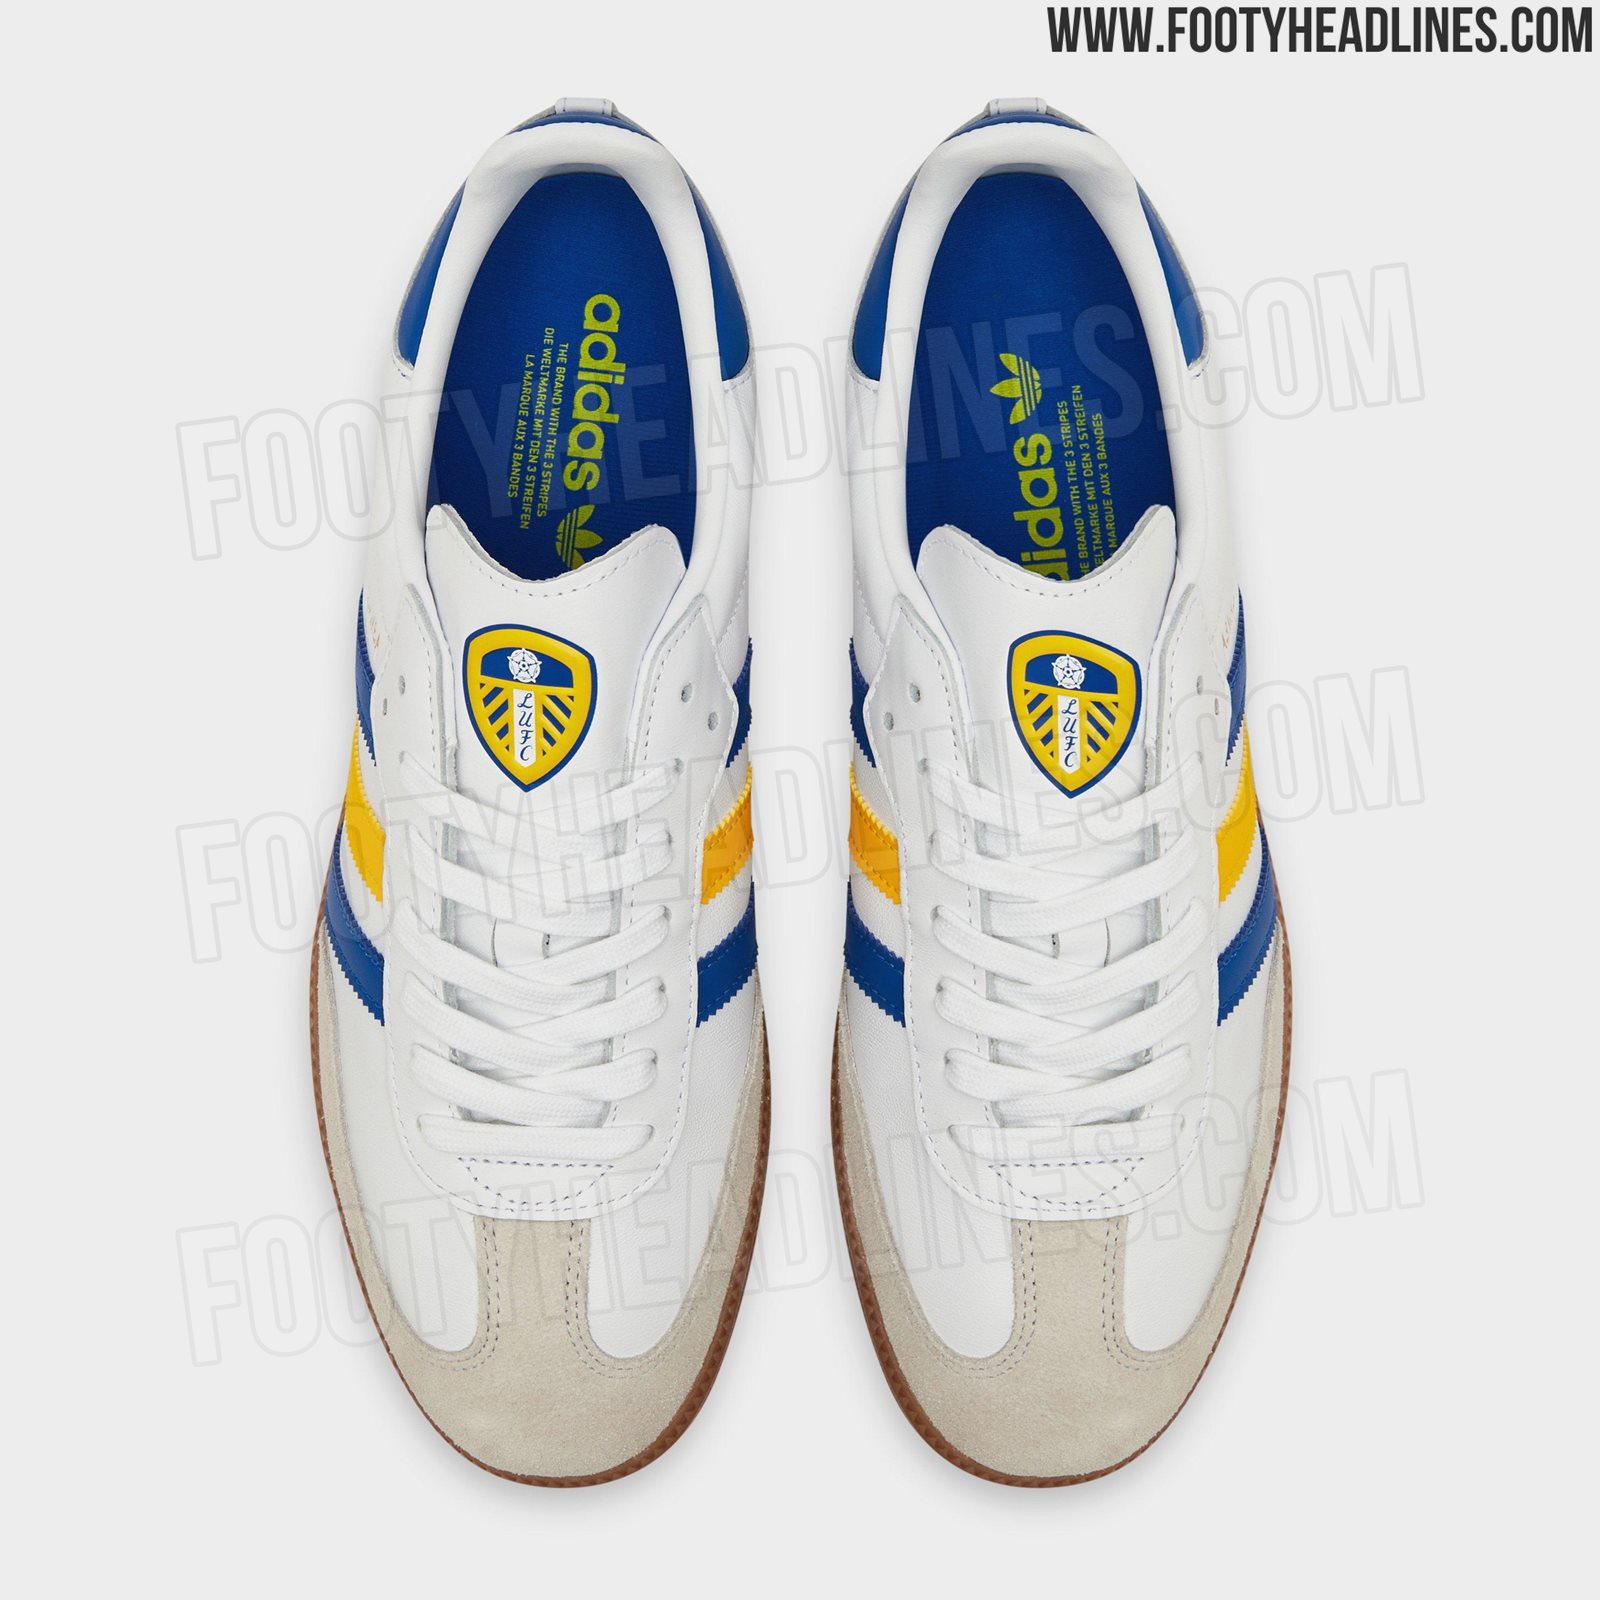 conspiración Por cierto Abrumar Exclusive: Adidas Leeds United Samba Shoes Leaked - Inspired by Unreleased  23-24 Home Kit - Footy Headlines